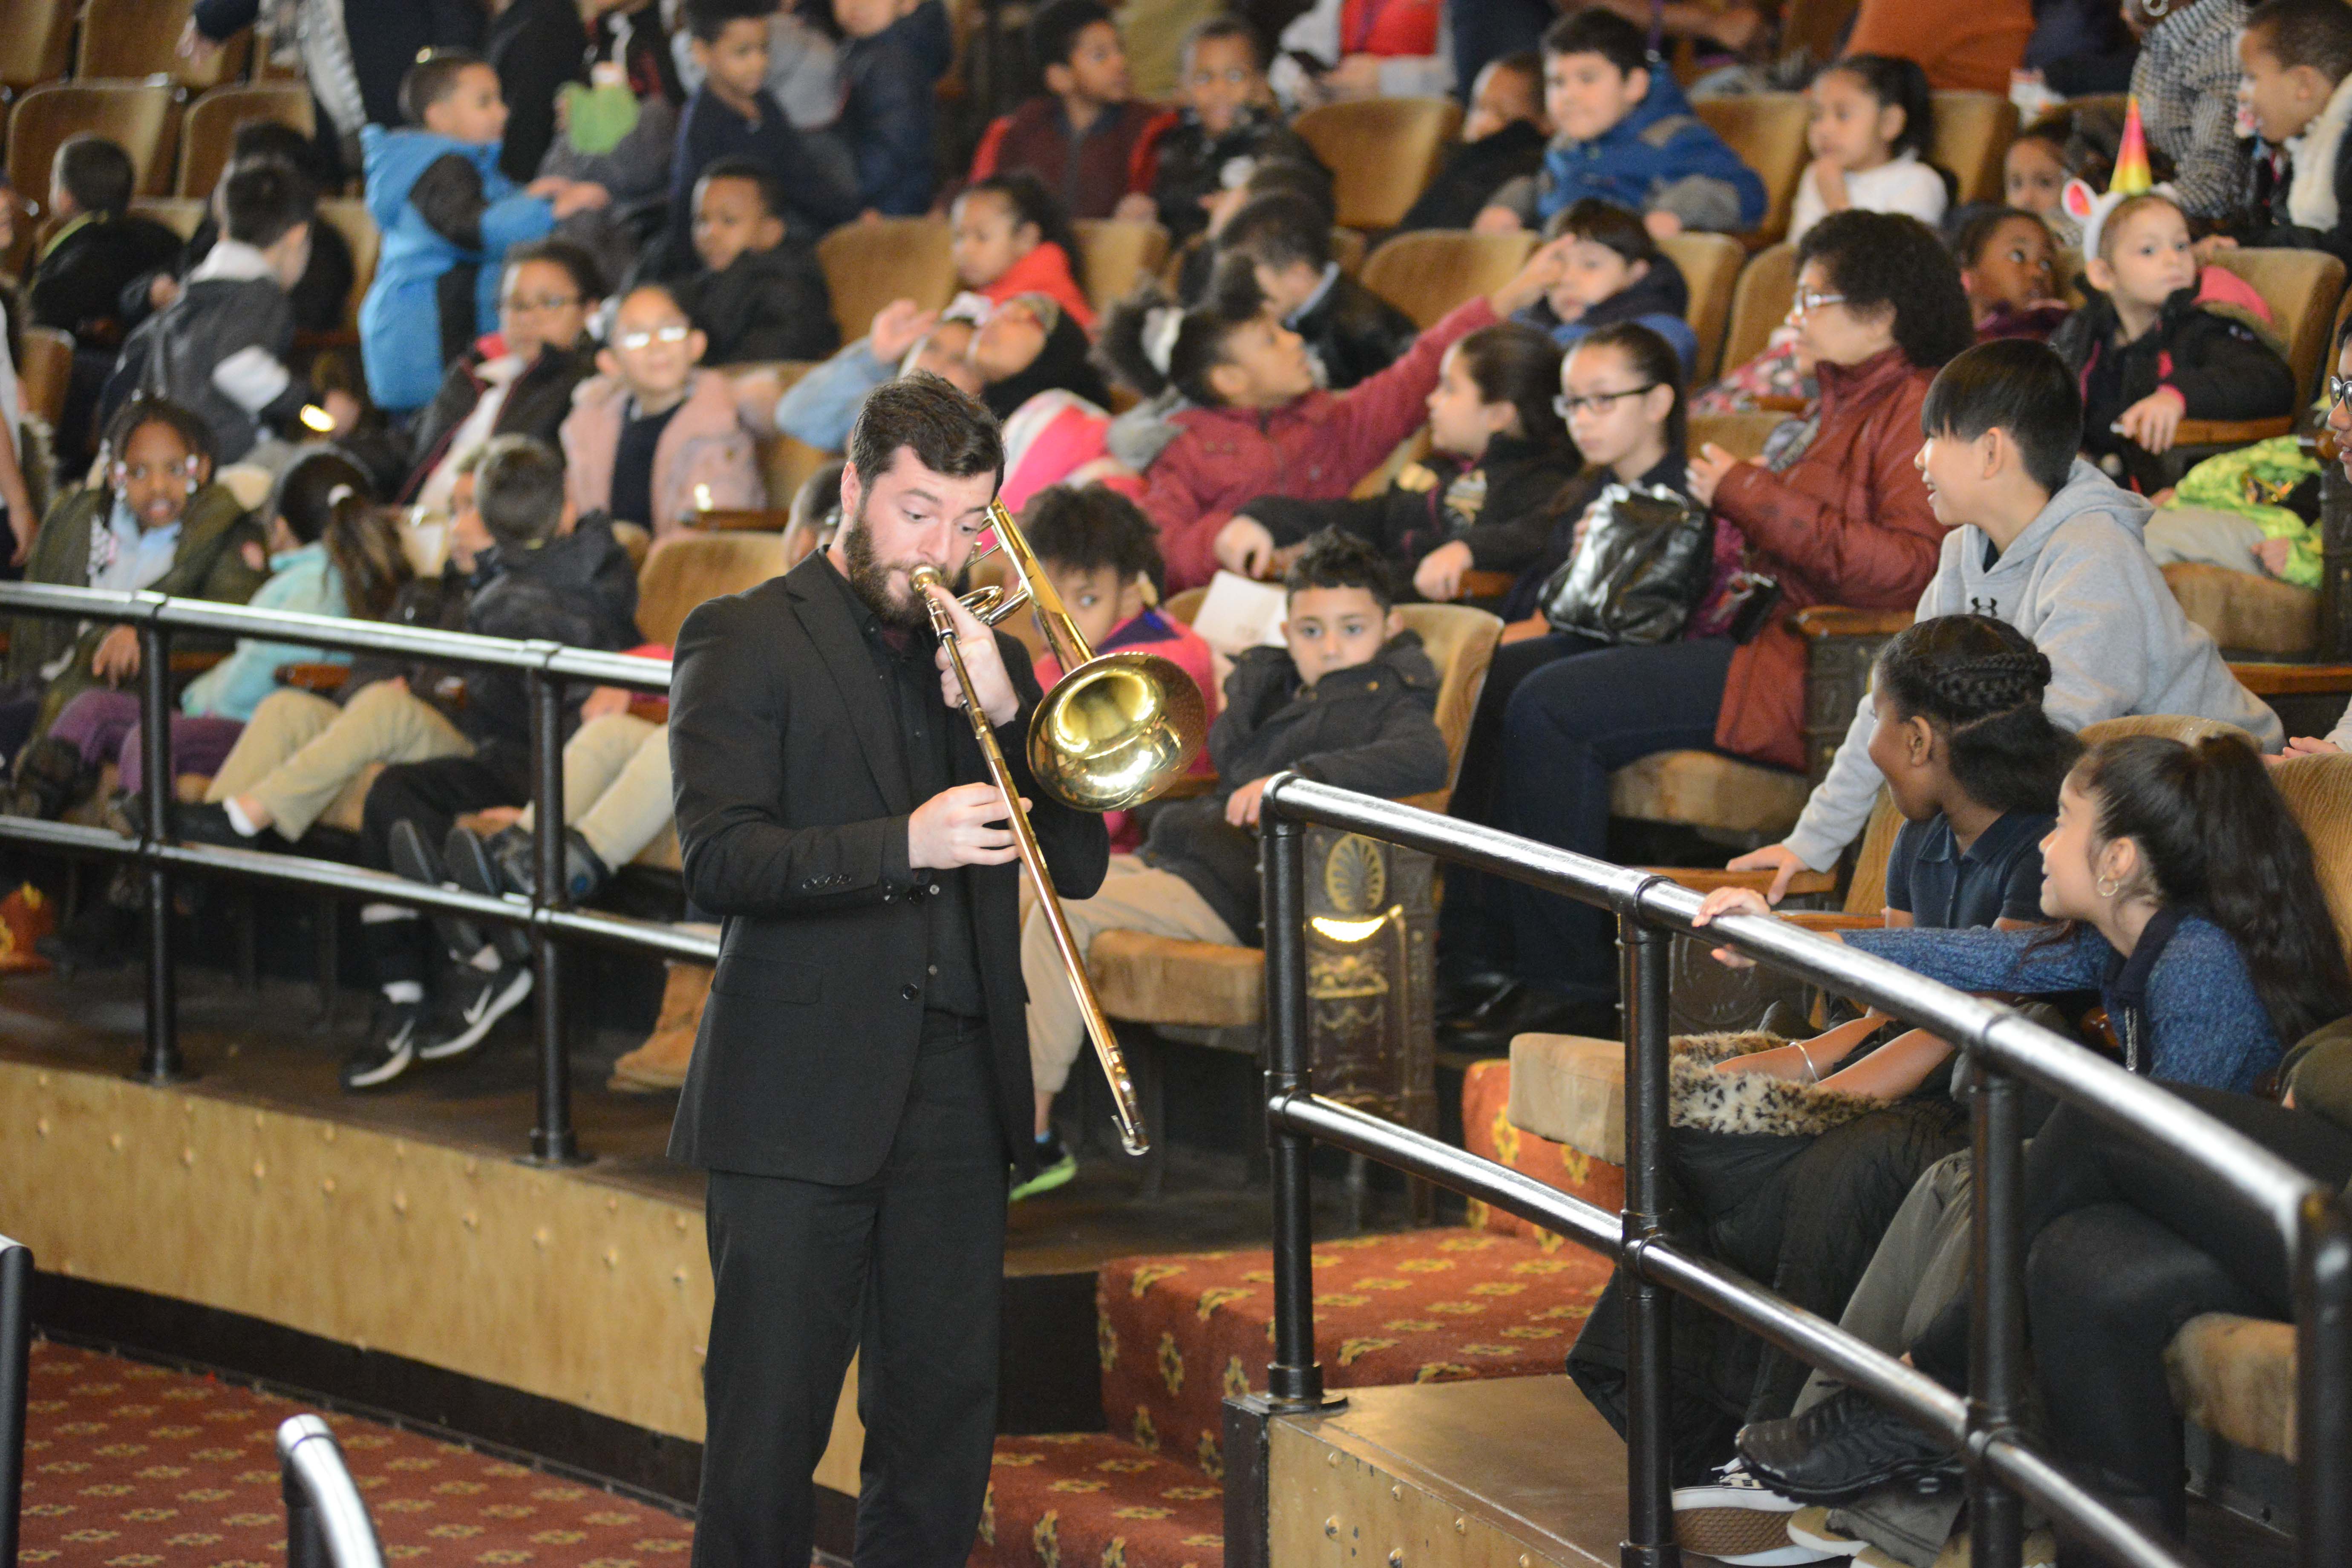 A musician playing a trombone walking through an auditorium filled with children